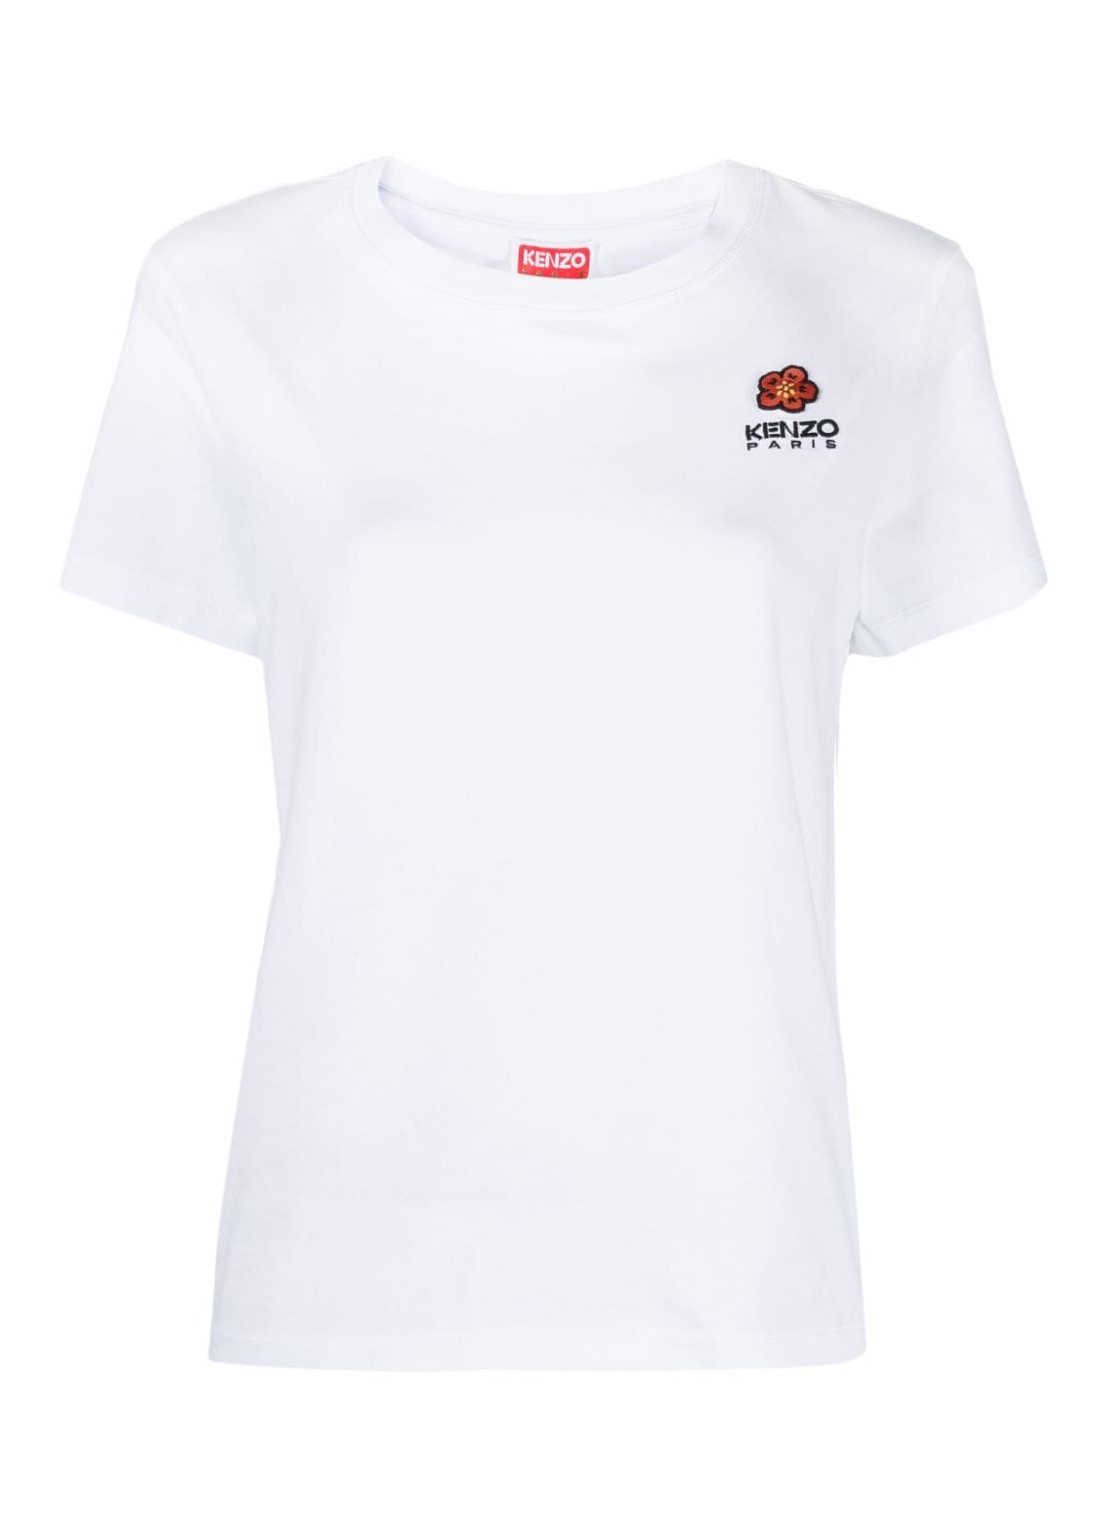 Top kenzo top woman crest logo classic t-shirt fc62ts0124so 01 talla blanco
 